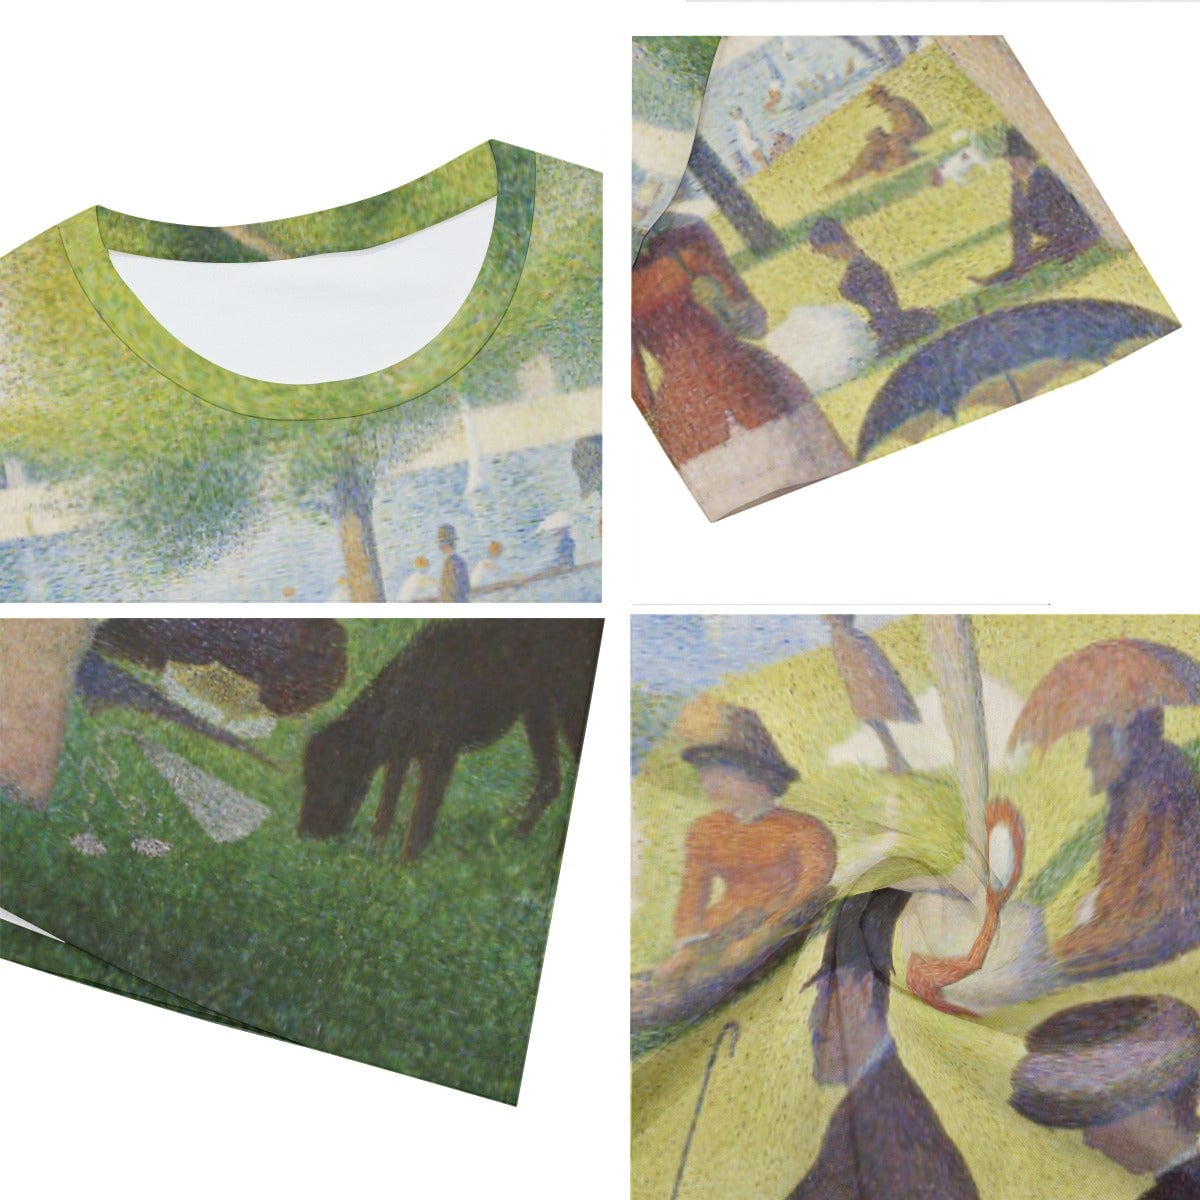 A Sunday on La Grande Jatte Georges Seurat T-Shirt